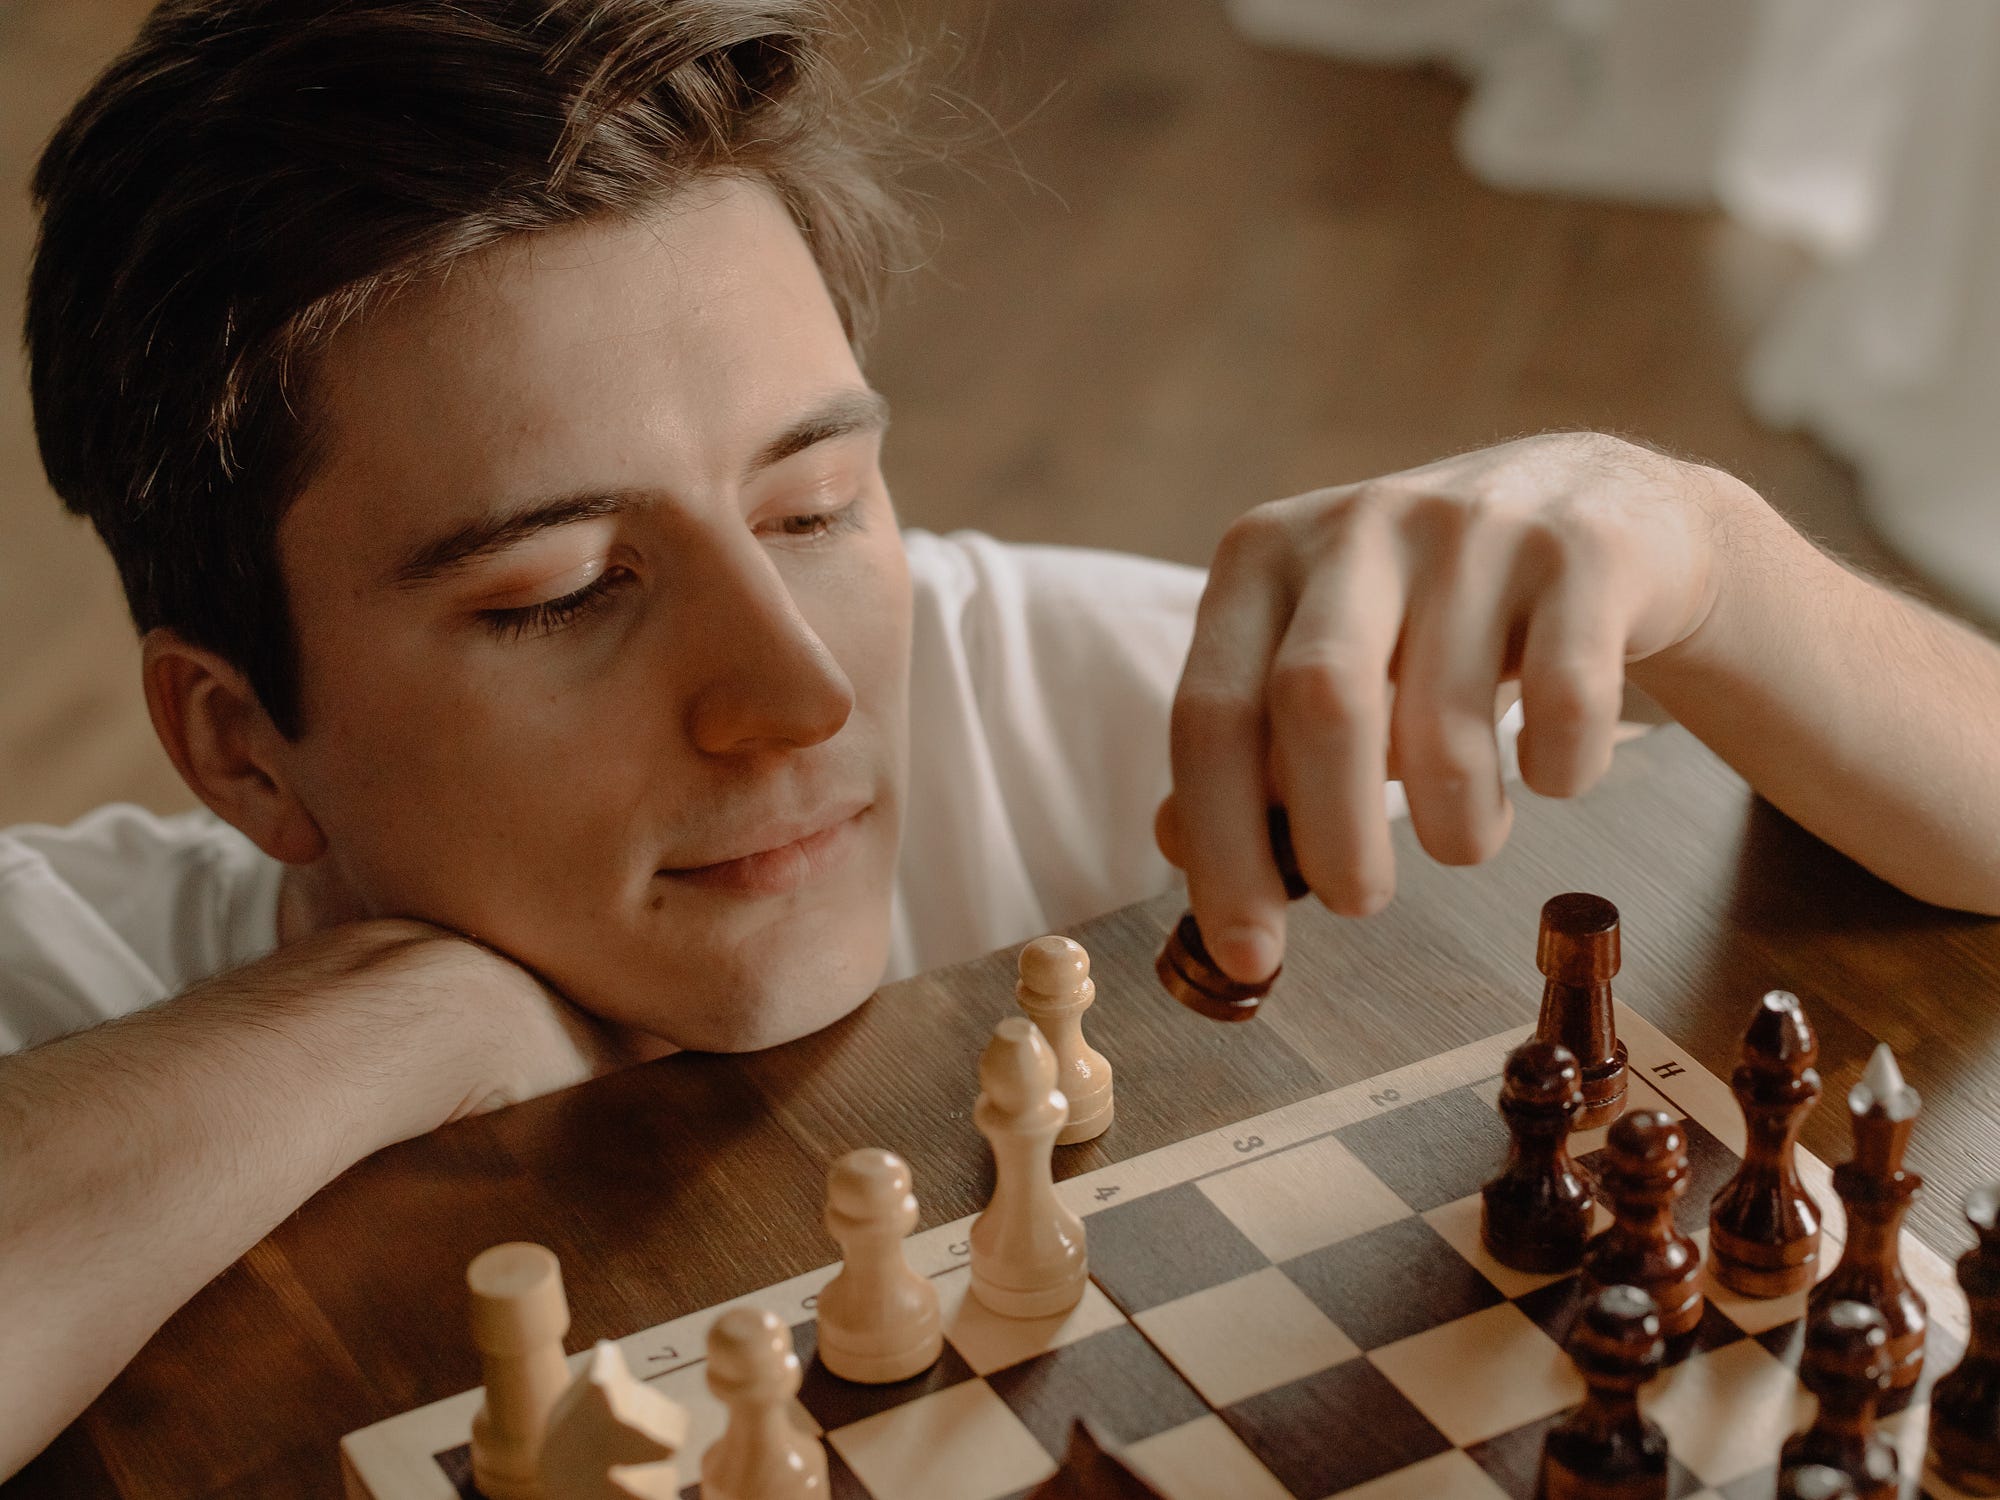 My Non-Boring Method to Learn Chess, by Alexandru Vasai